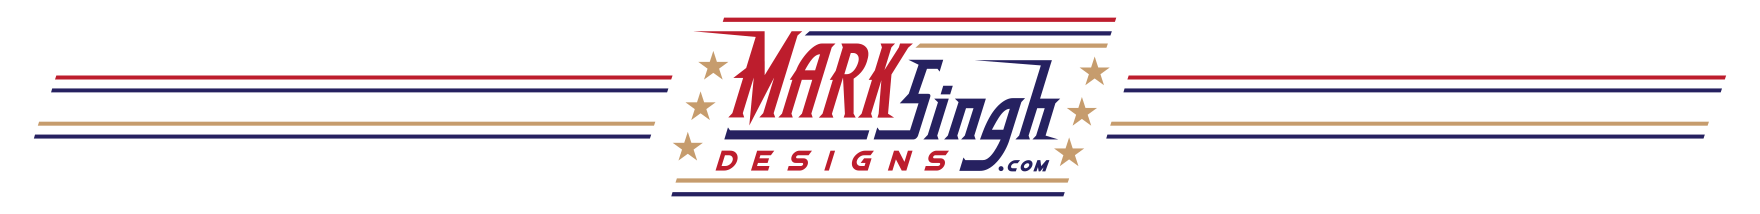 Mark Singh Designs Logo